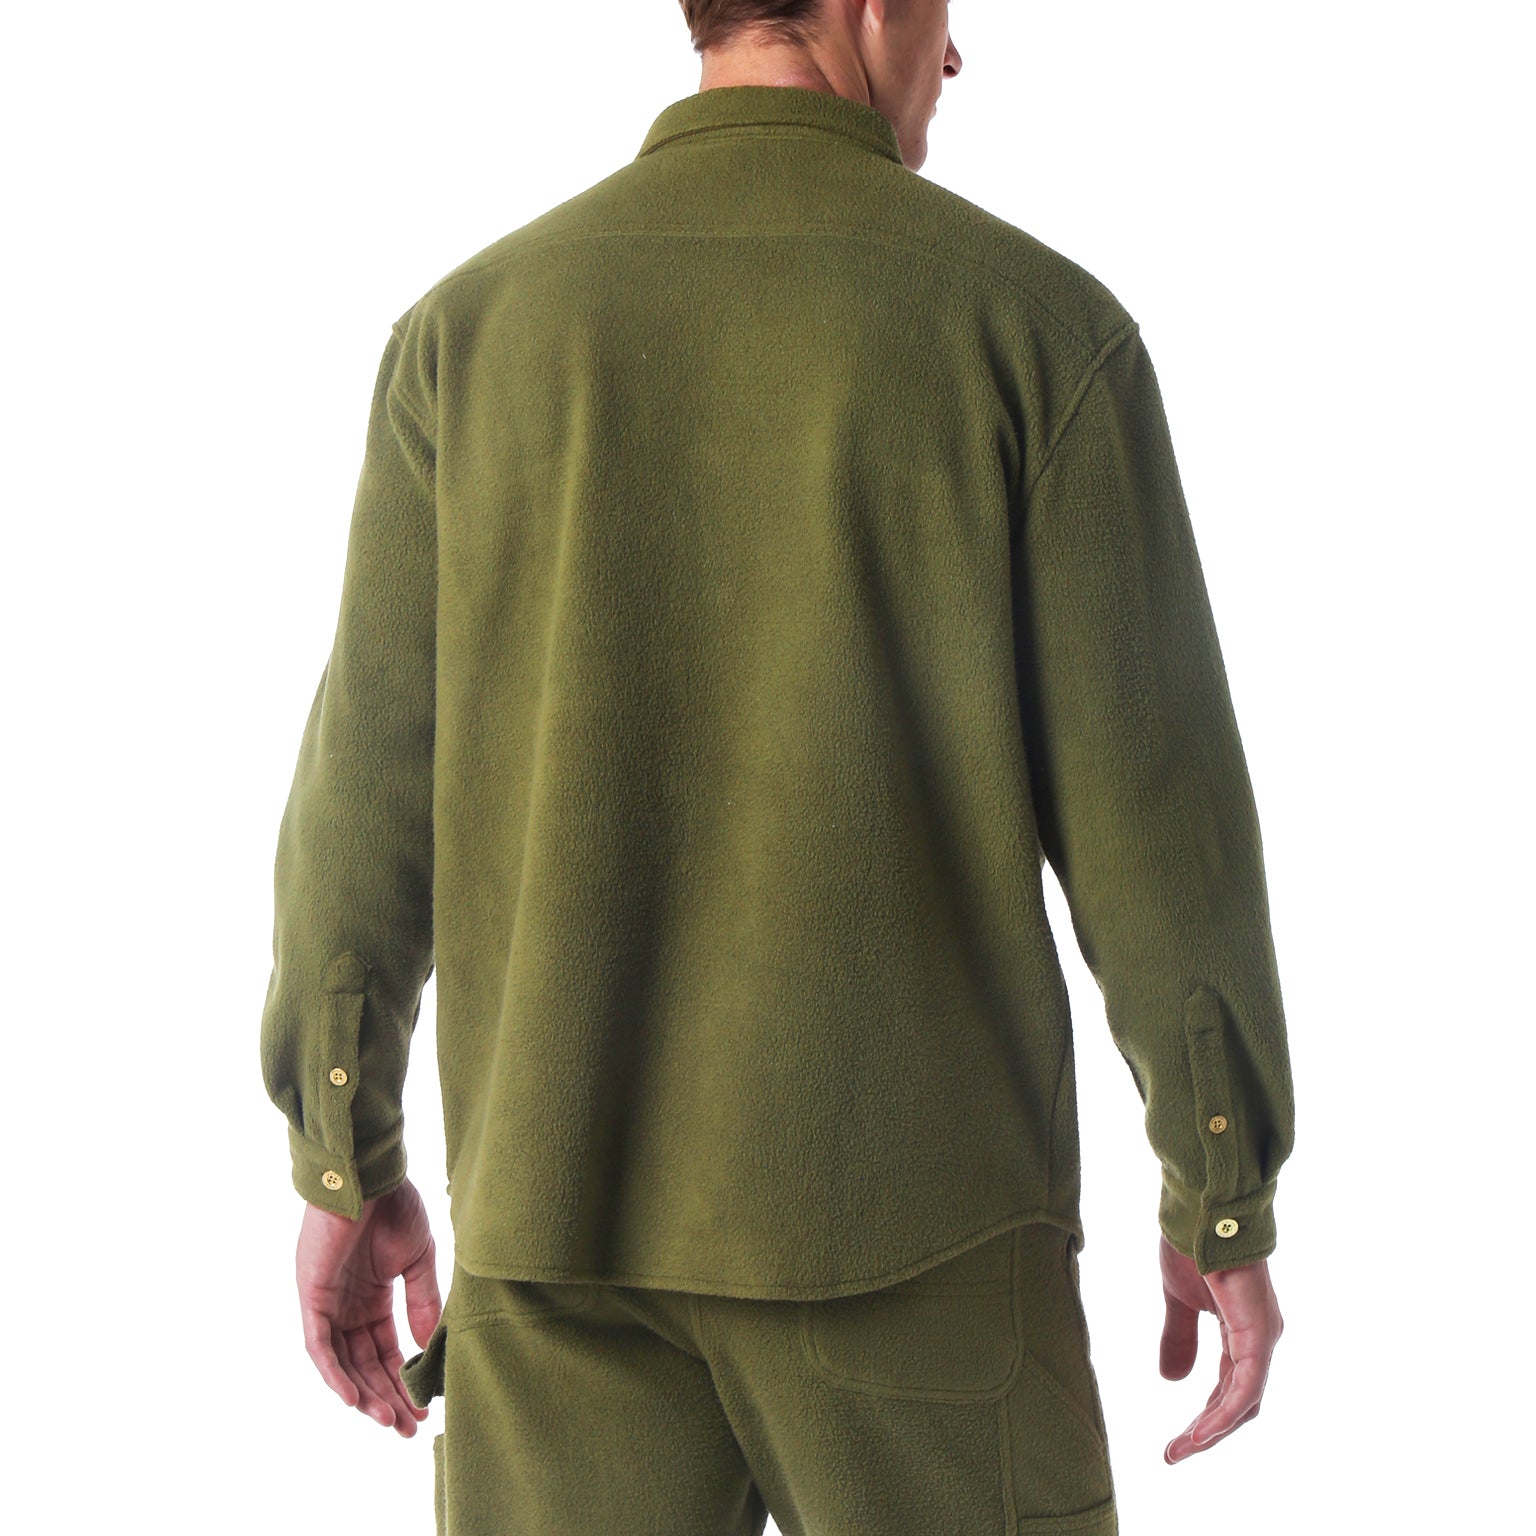 SAVE 70%- Light Army Fleece Work Shirt